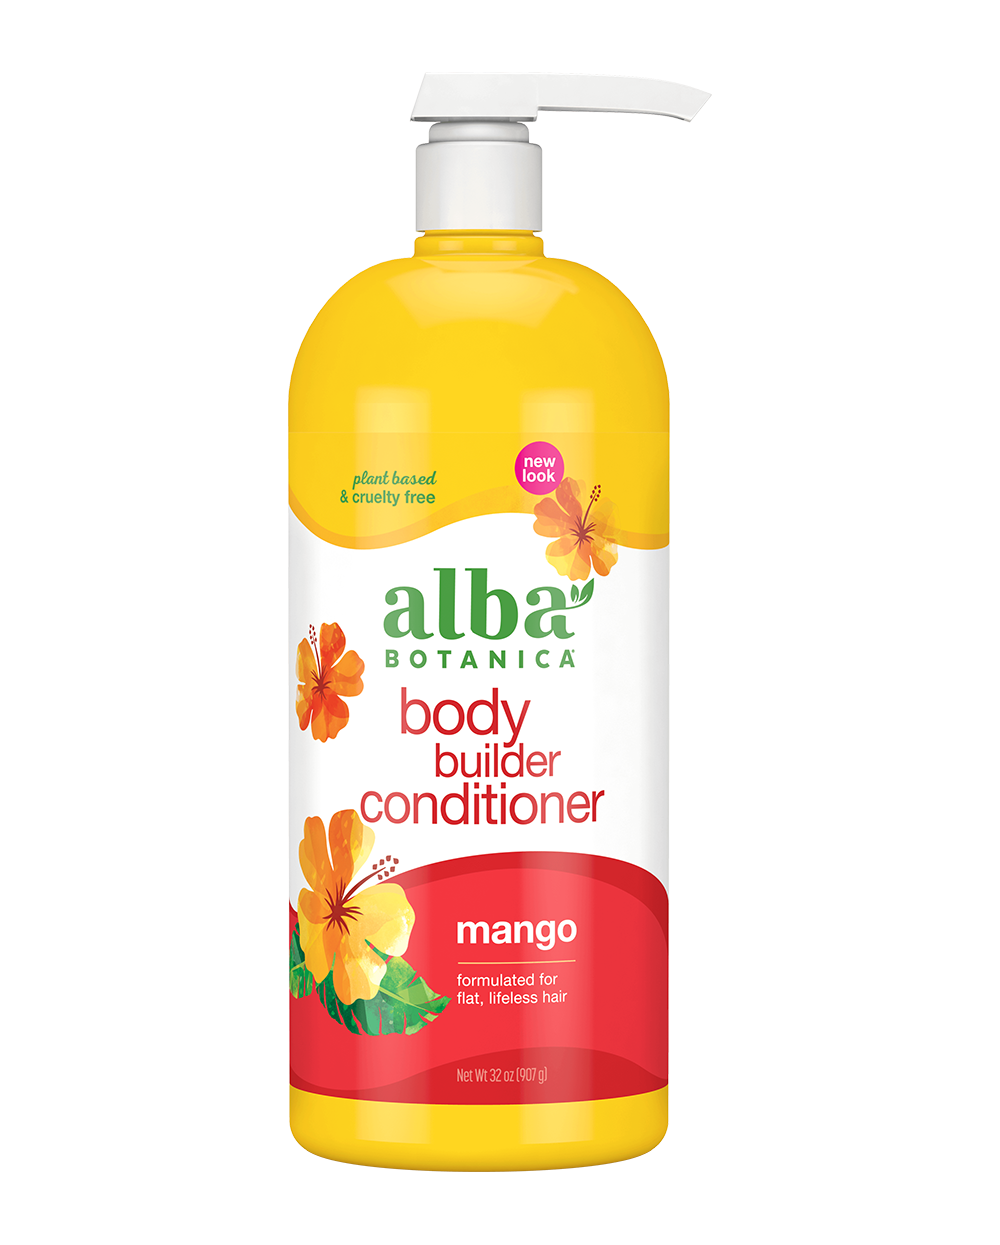 mango body builder conditioner